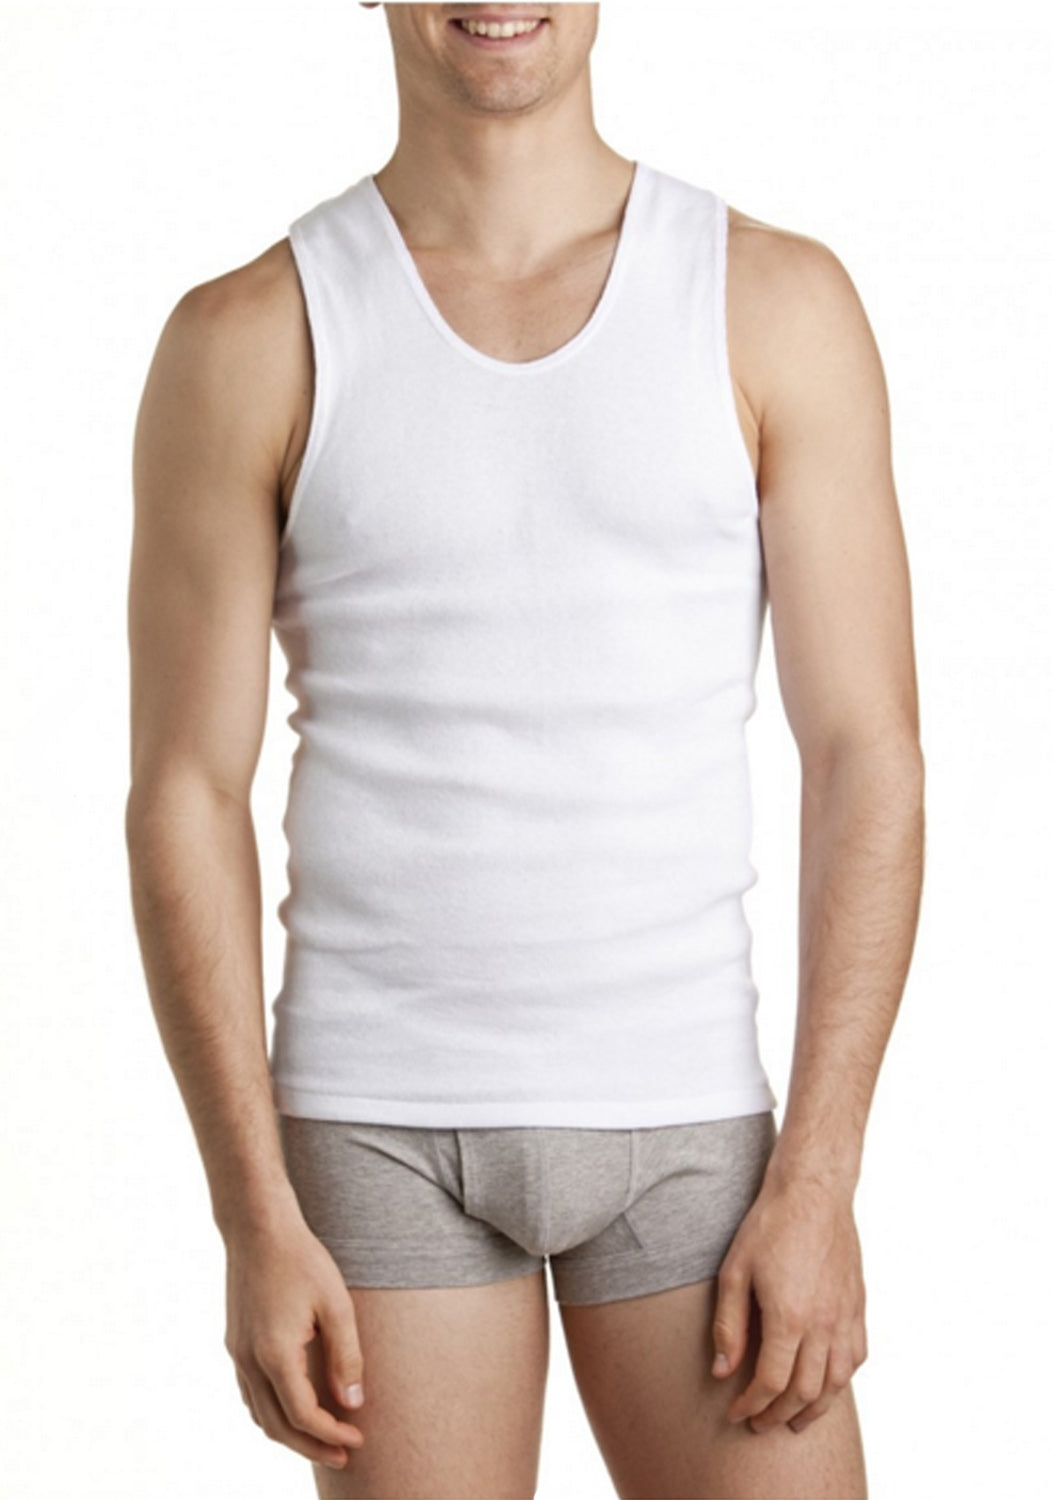 Bonds Chesty Bond Singlet 16 White Mens Underwear by Bonds | The Bloke Shop